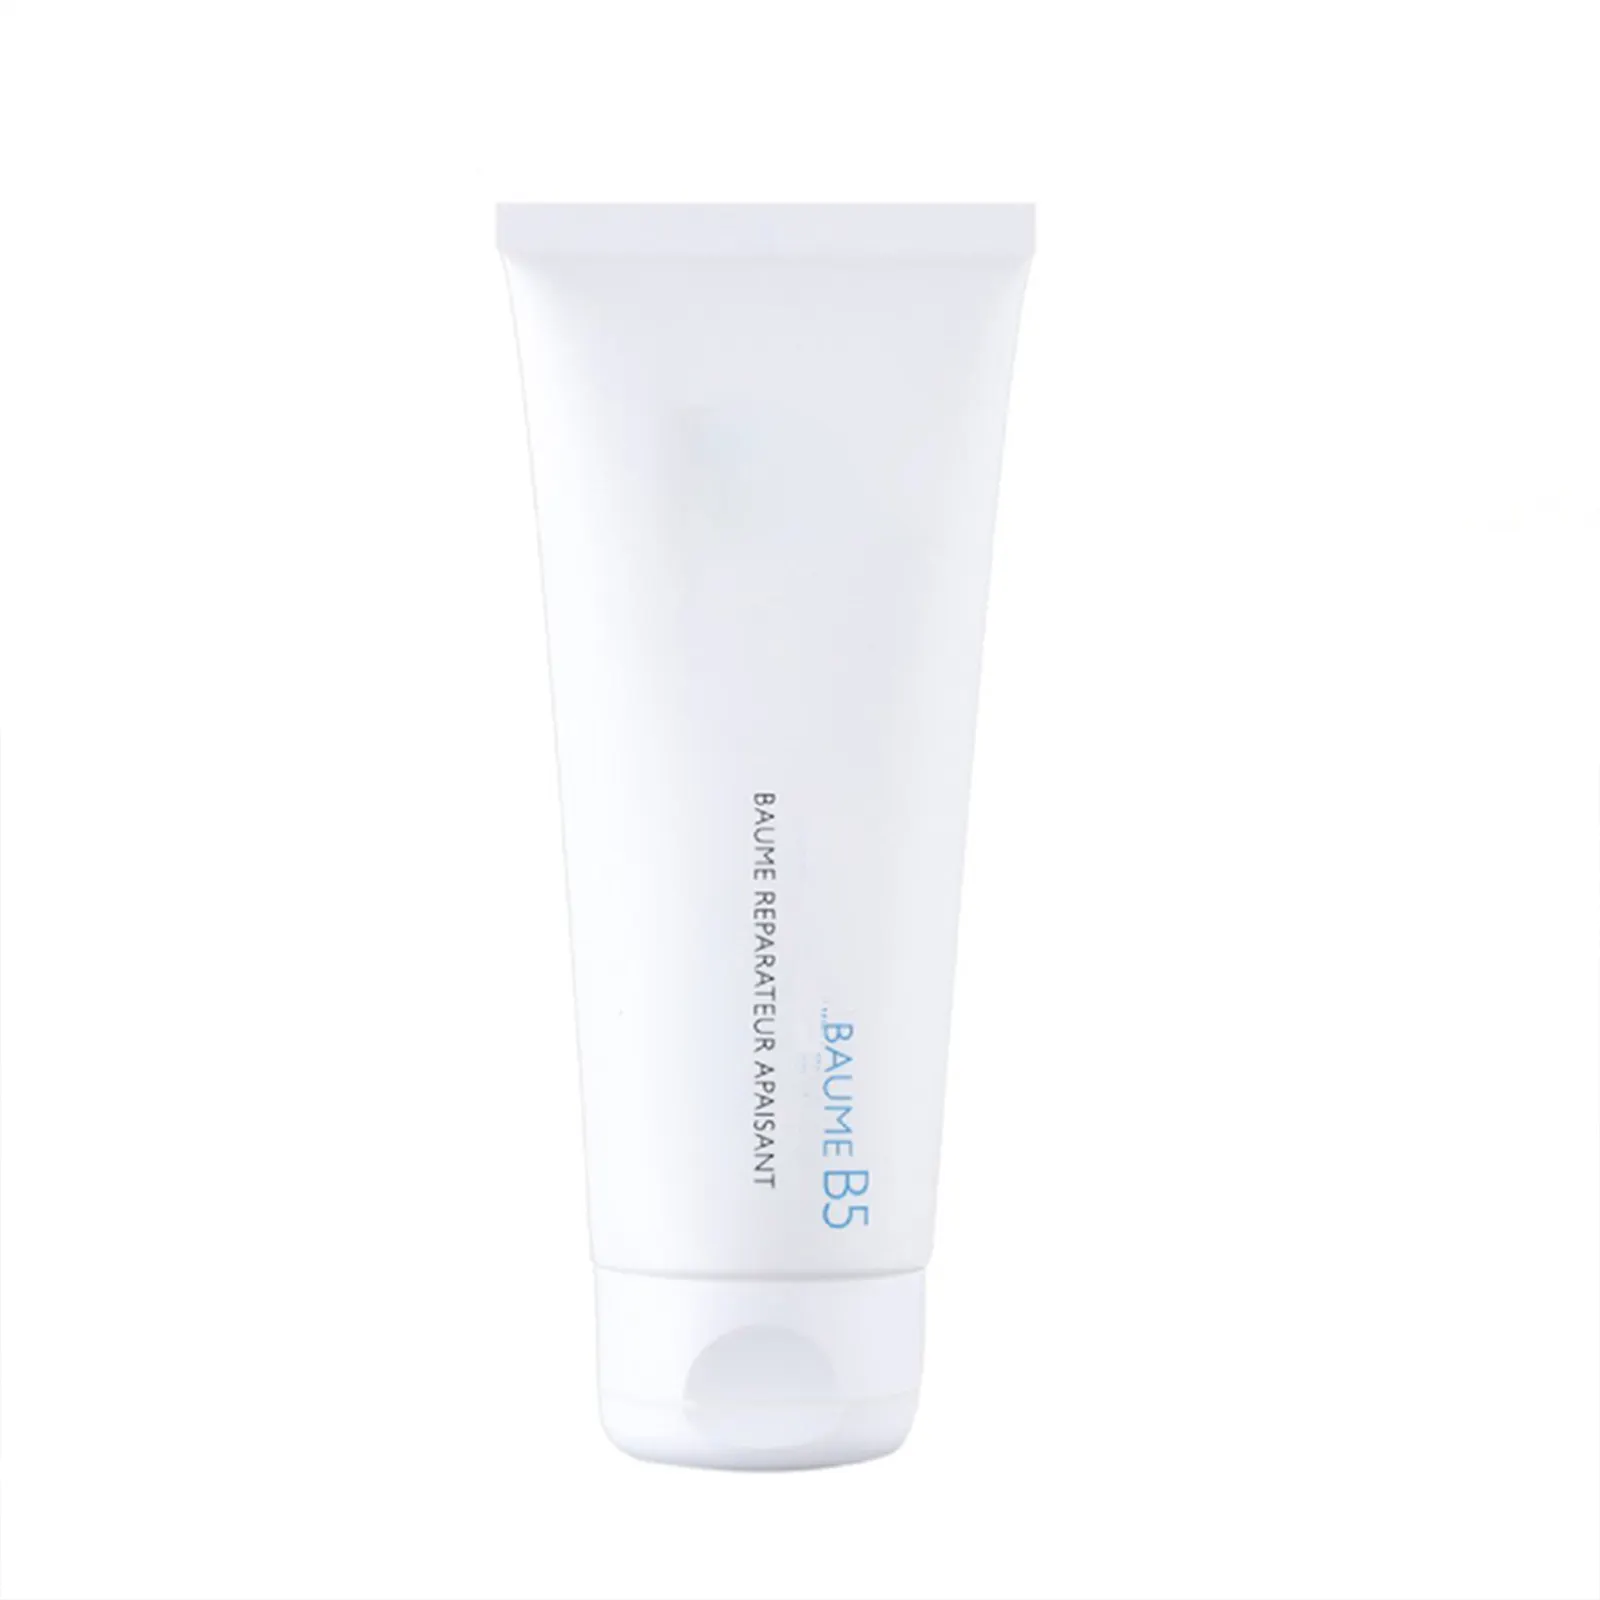 Best Selling Cicaplast Baume B5 Multi Effect Repairing Purifying Moisturizing Cream for Dry & Irritated Skin